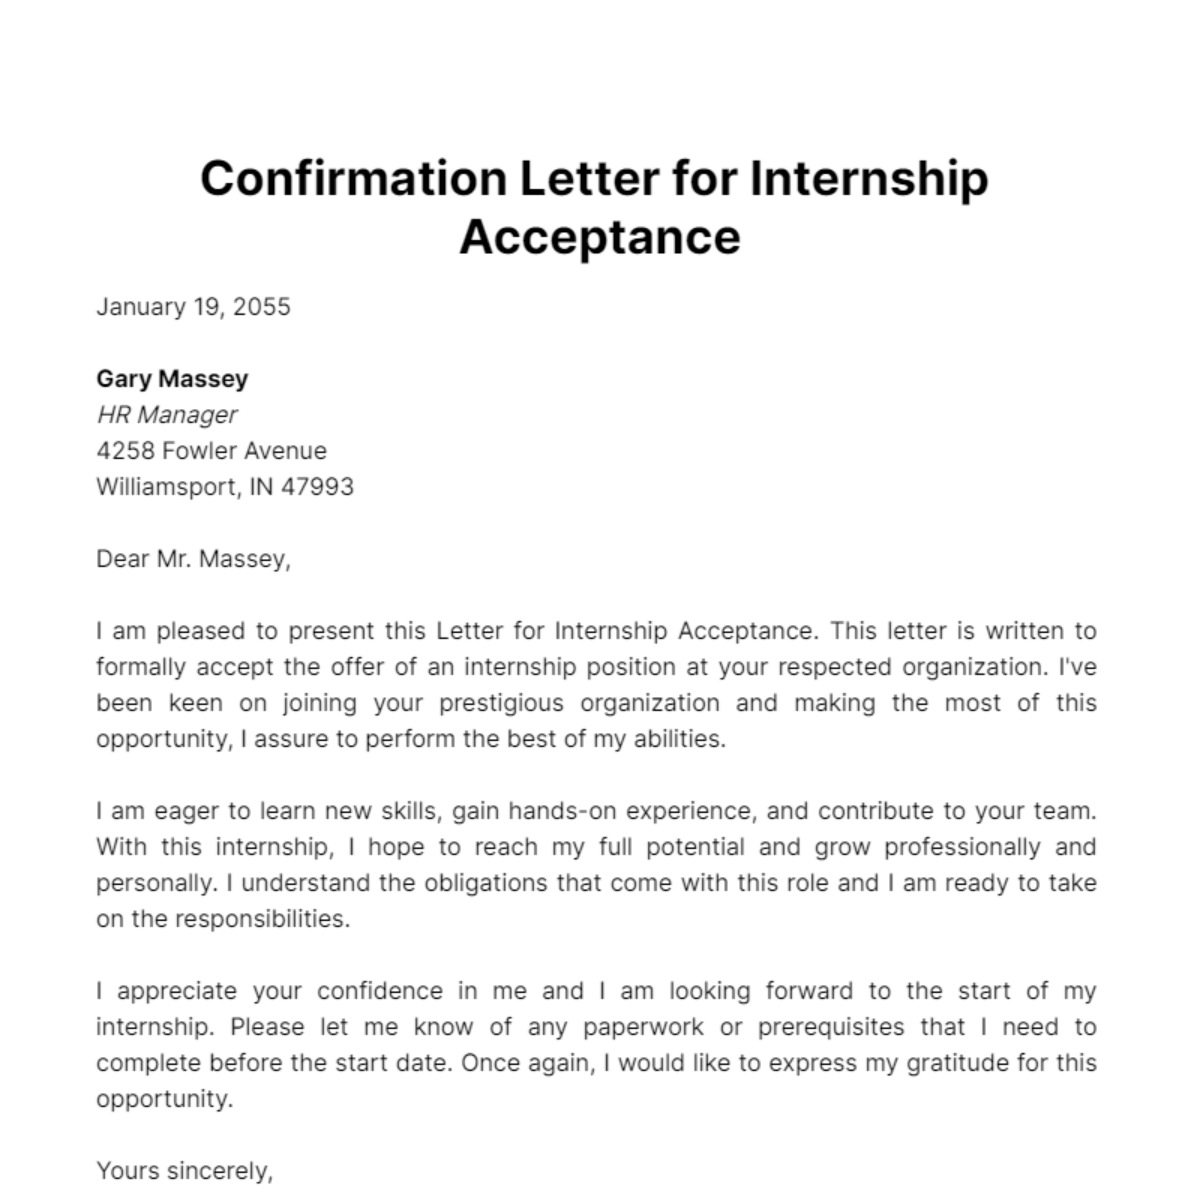 Confirmation Letter for Internship Acceptance Template